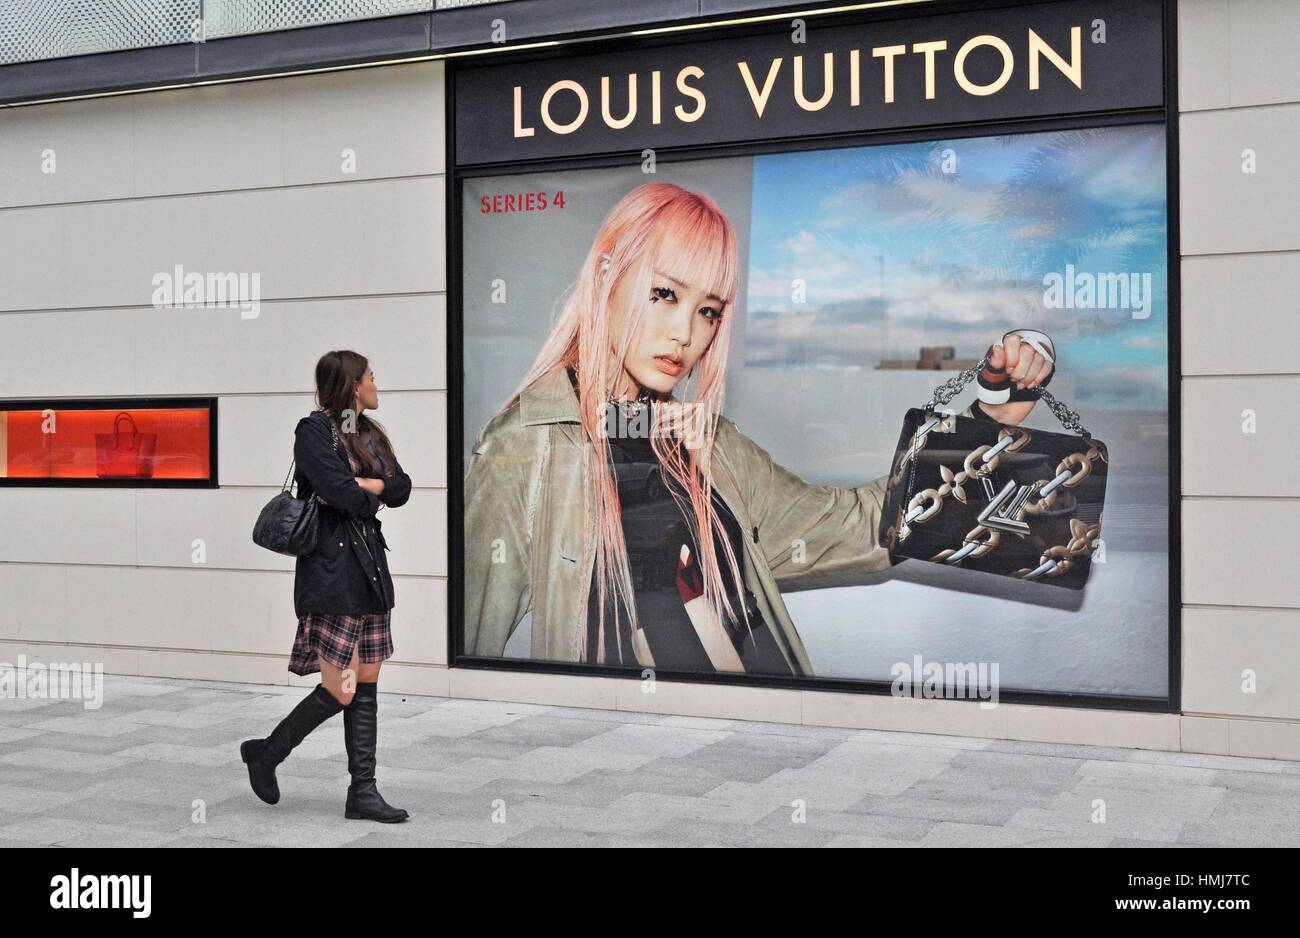 Louis Vuitton Advertising Poster, 30's / 40's Style Print, Ad Wall Art,  Vintage Design Magazine, Retro Advertisement, Luxury Fashion Poster